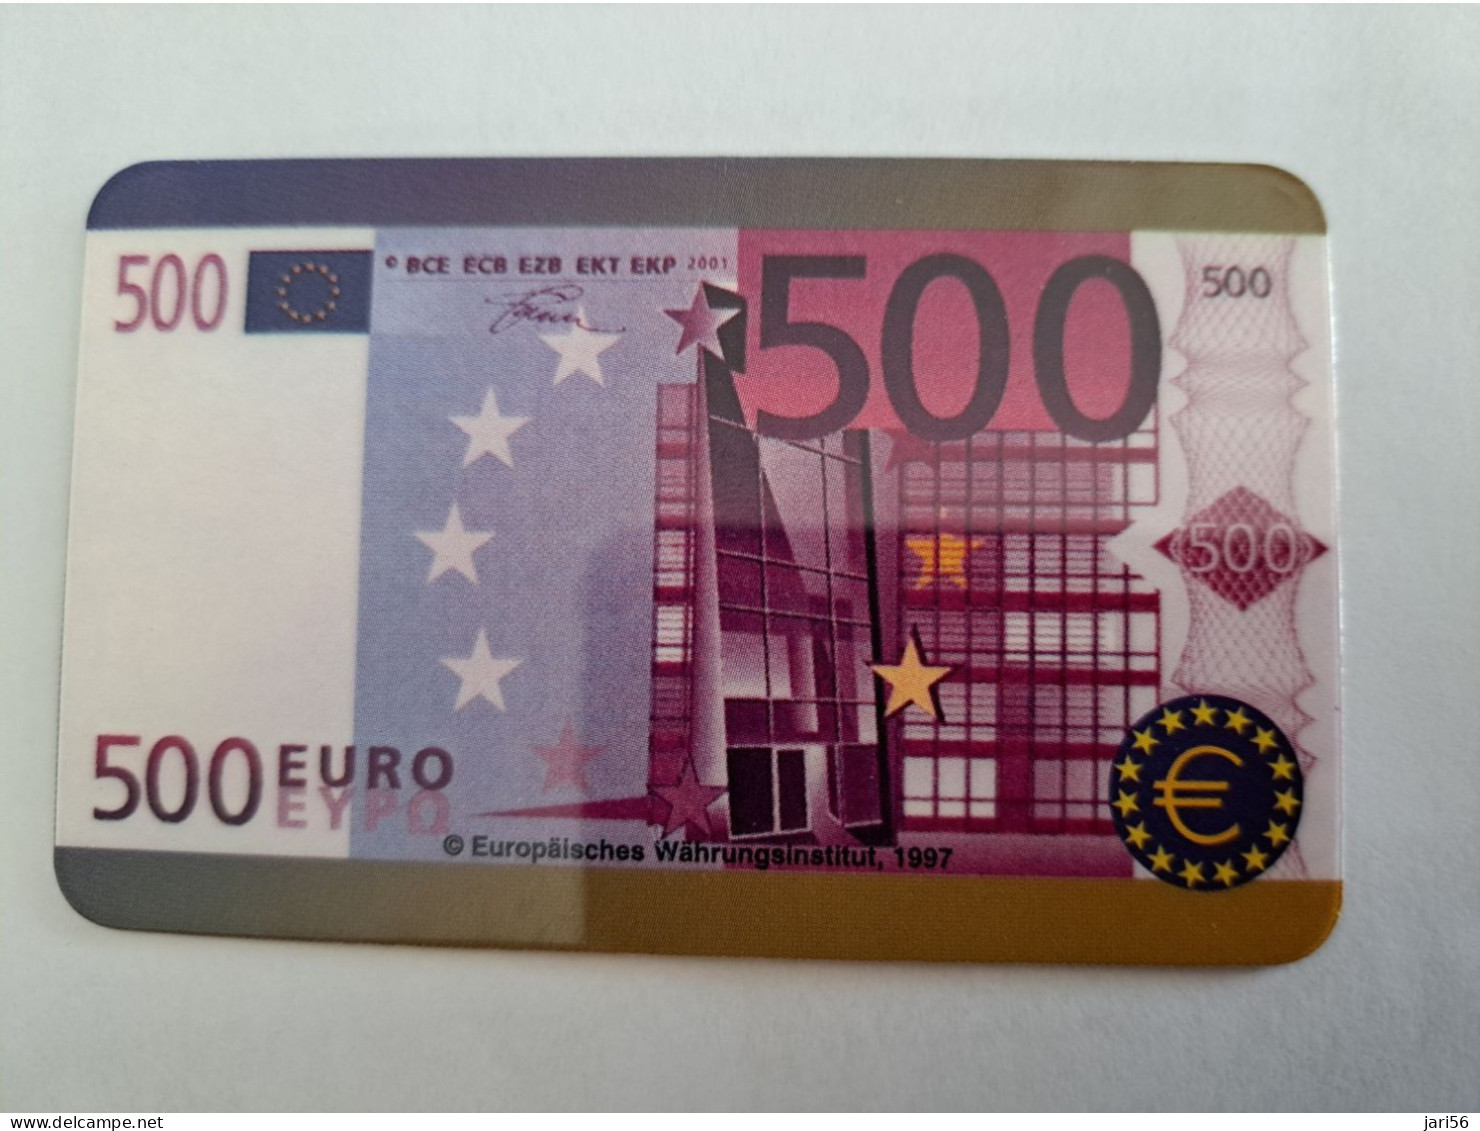 GREAT BRITAIN   20 UNITS   / EURO COINS/ BILJET 500 EURO    (date 09/98)  PREPAID CARD / MINT      **13302** - [10] Sammlungen